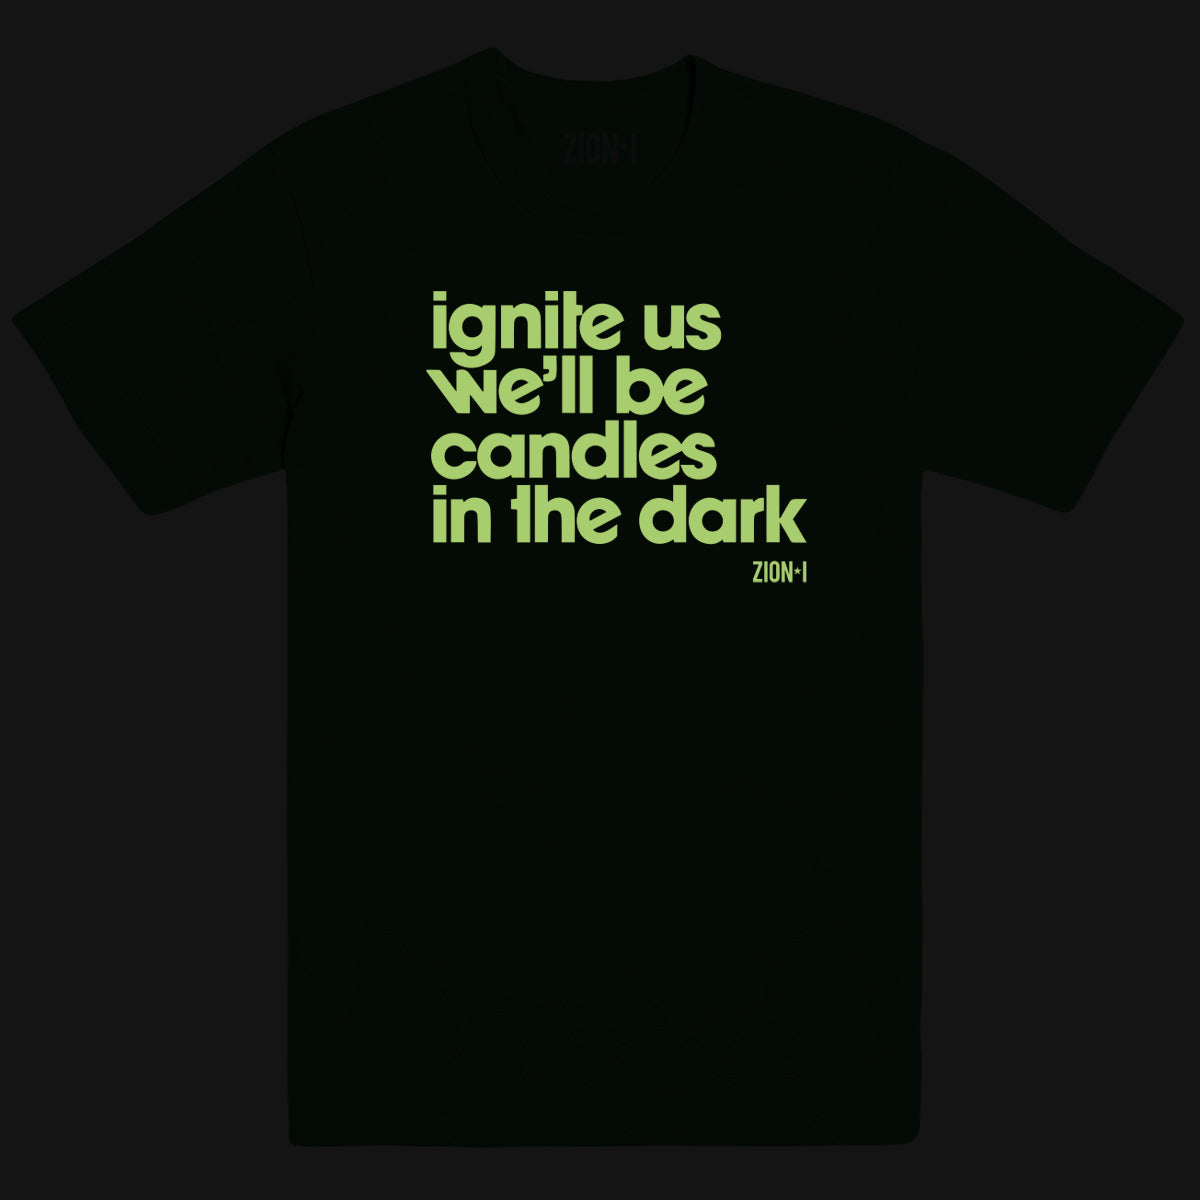 Ignite Us Tee - Green (Glow in the Dark Print)